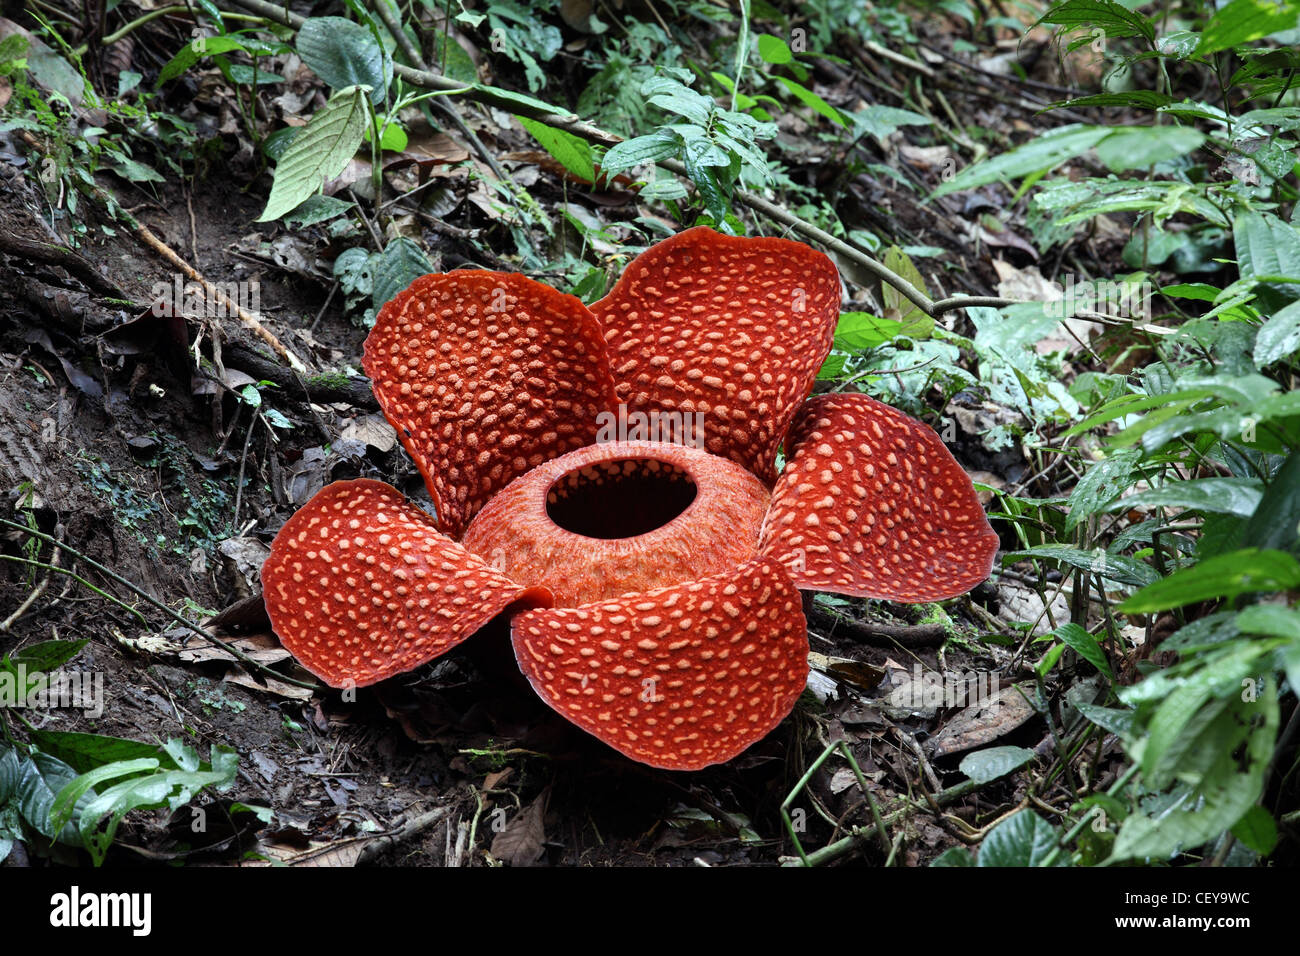 Rafflesia (Rafflesia arnoldii) flower, a parasitic plant that lives on the Tetrastigma vine. Bukittinggi, West Sumatra Stock Photo